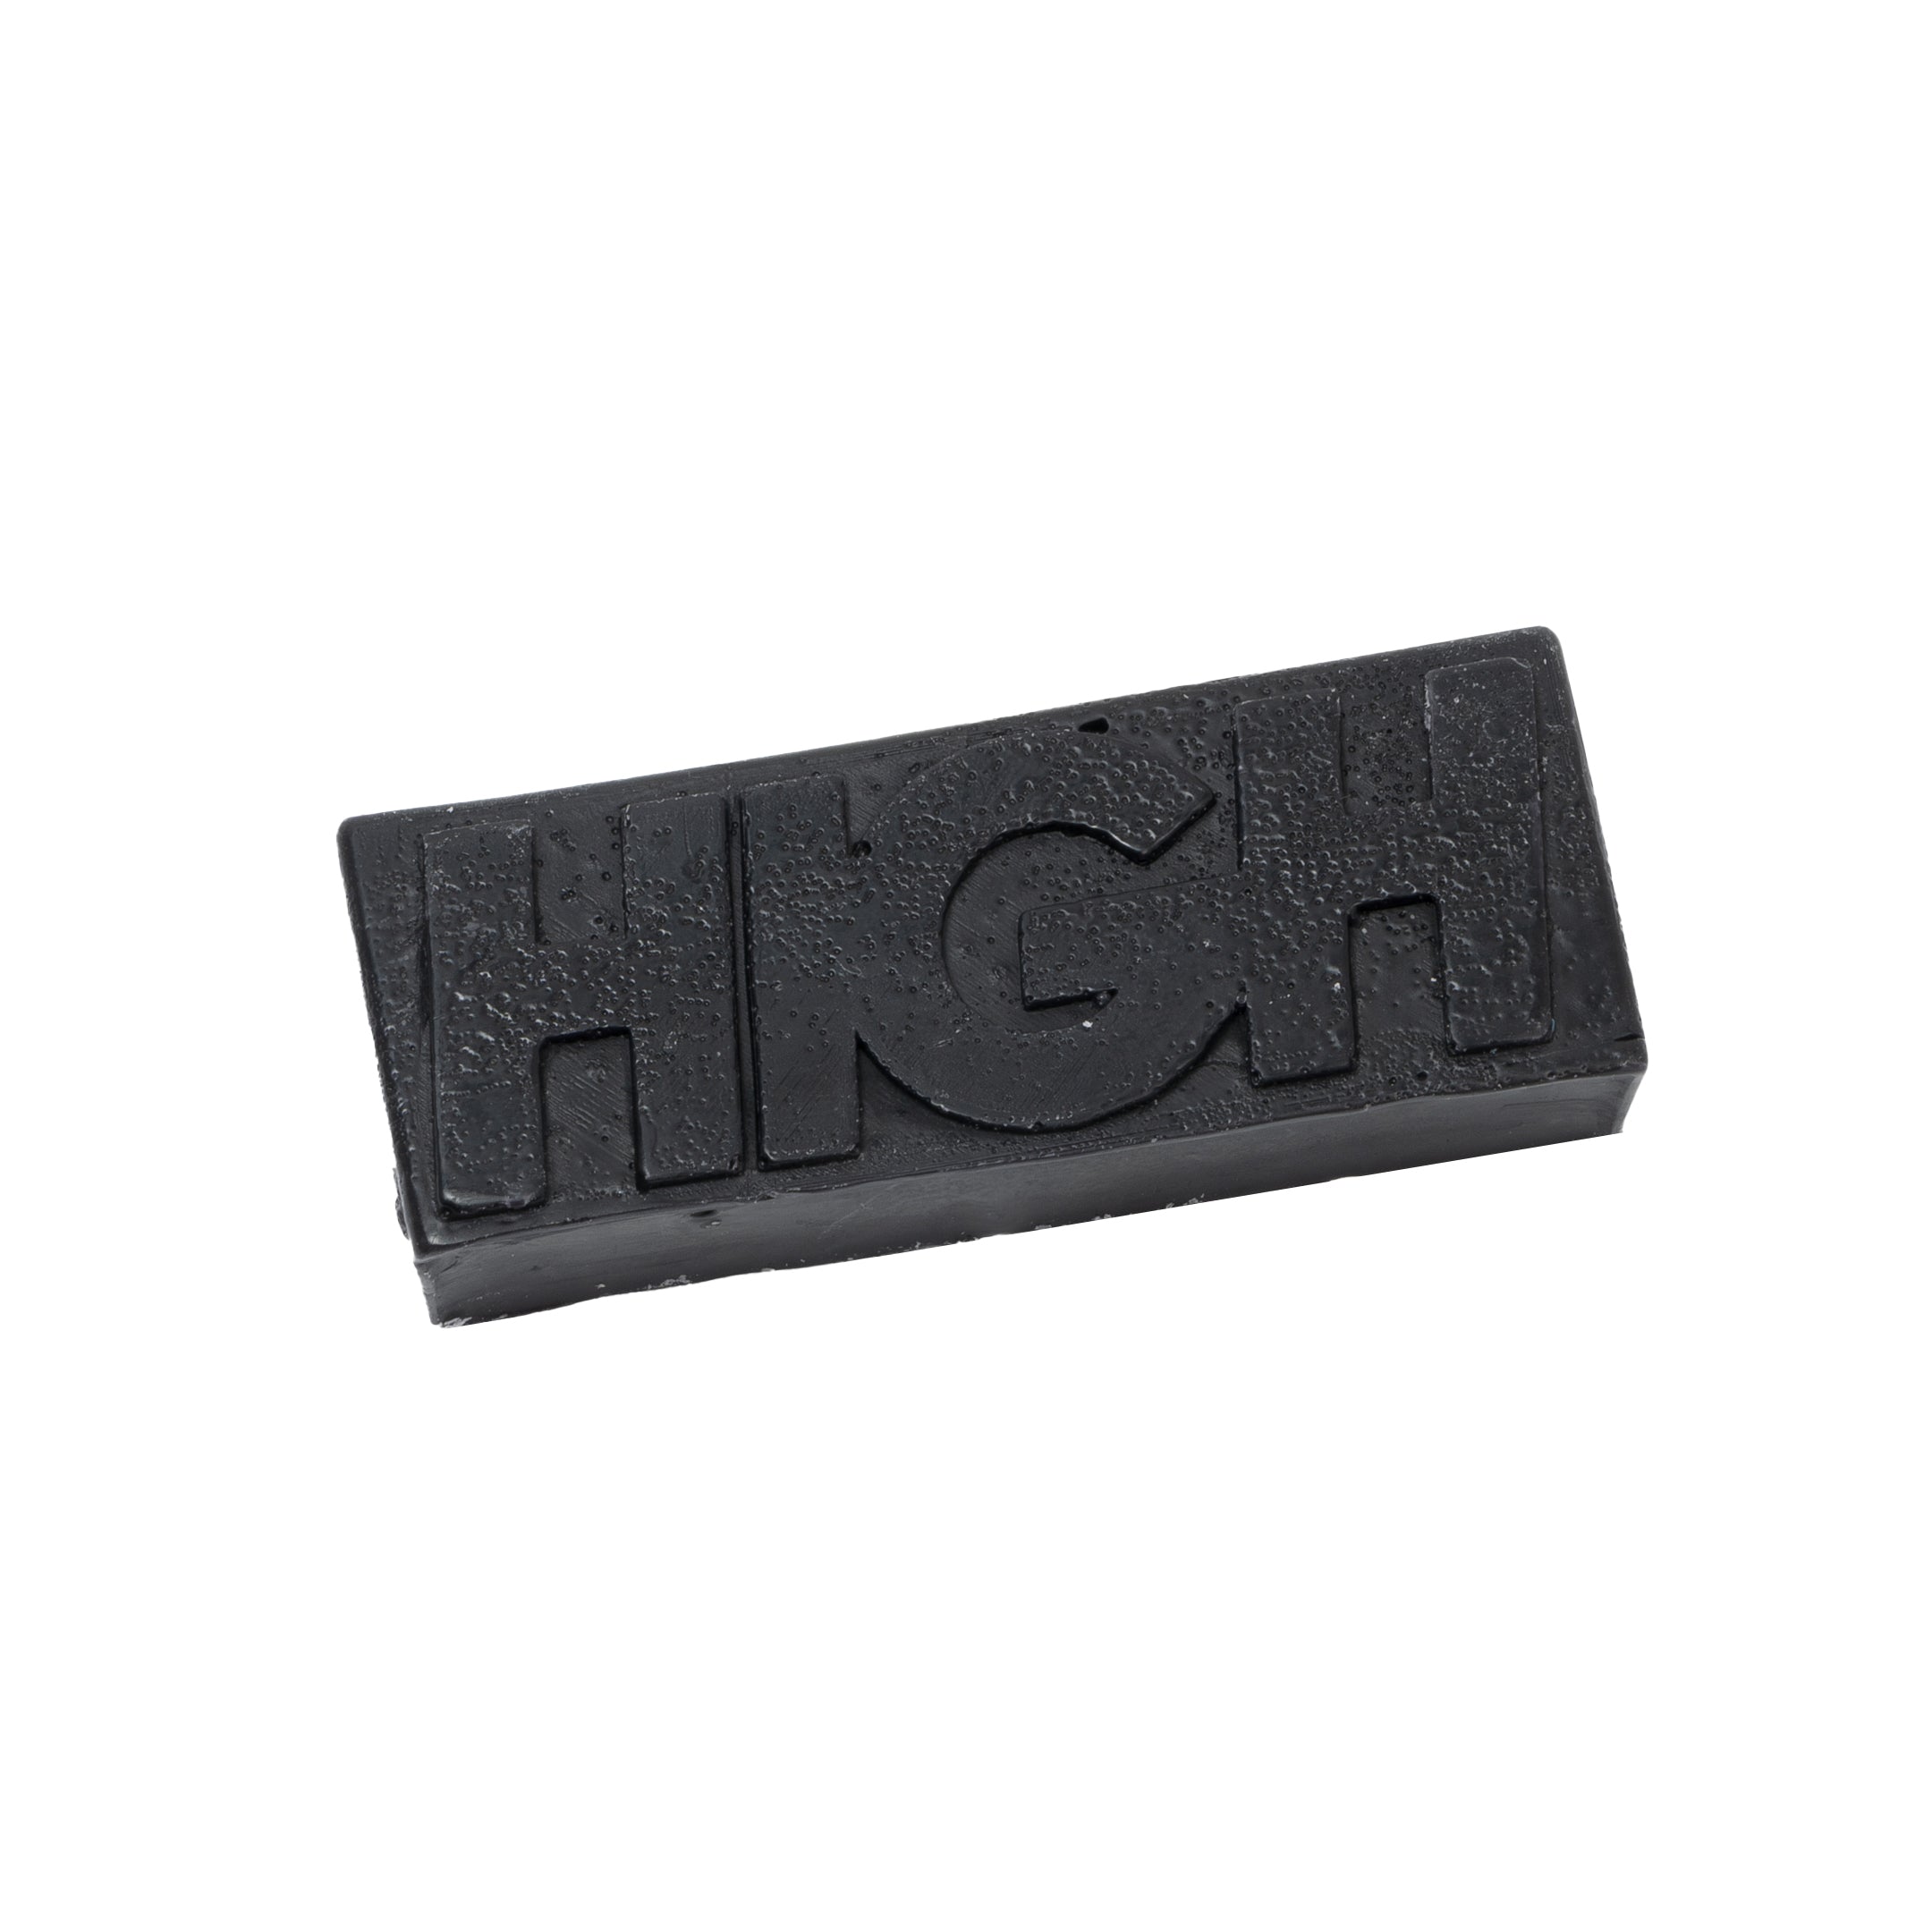 HIGH - Wax Logo - THE GAME